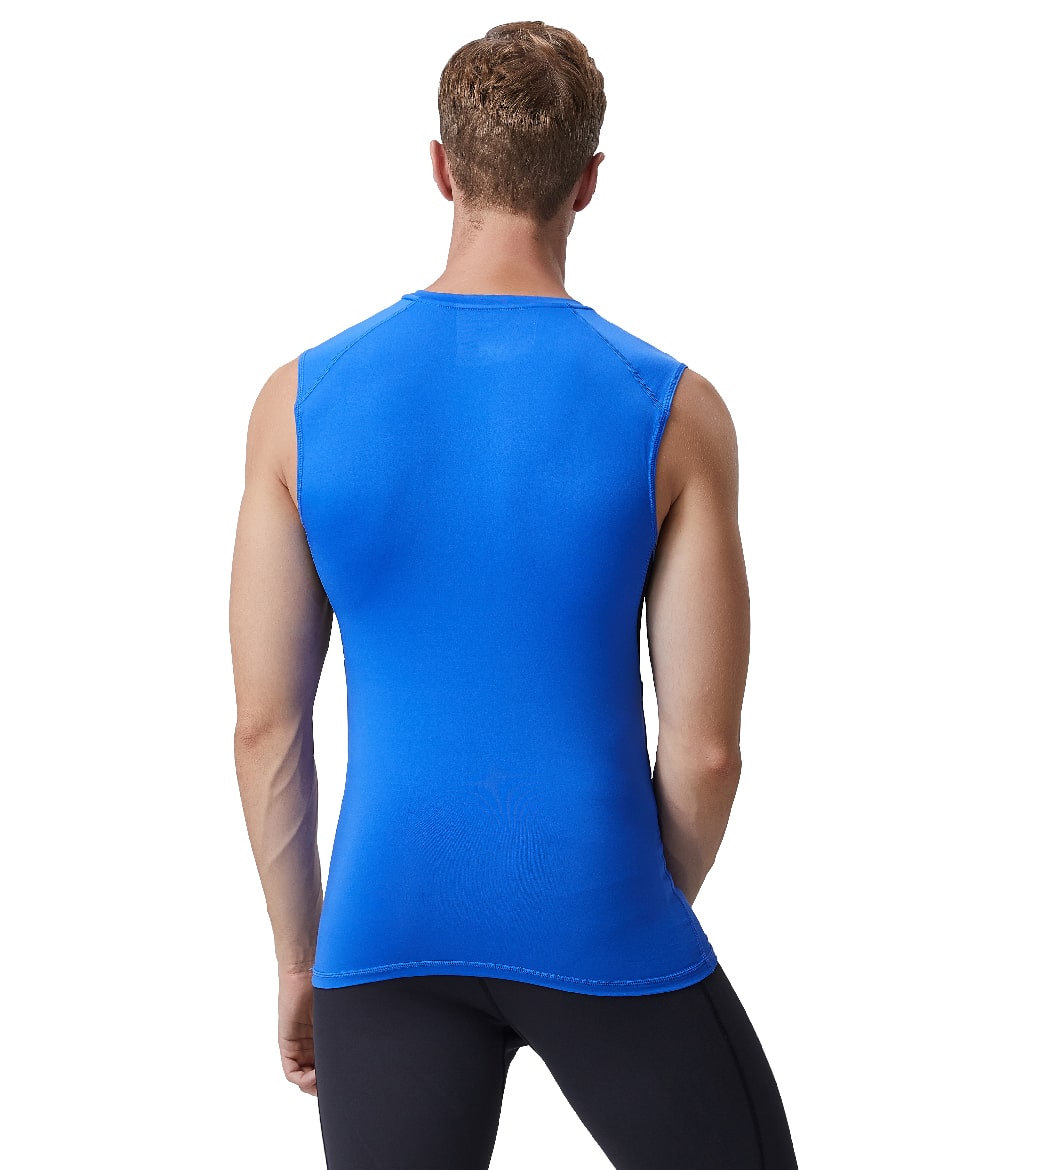 LOVESOFT Men's Casual Quick Dry Sport sleeveless Vest